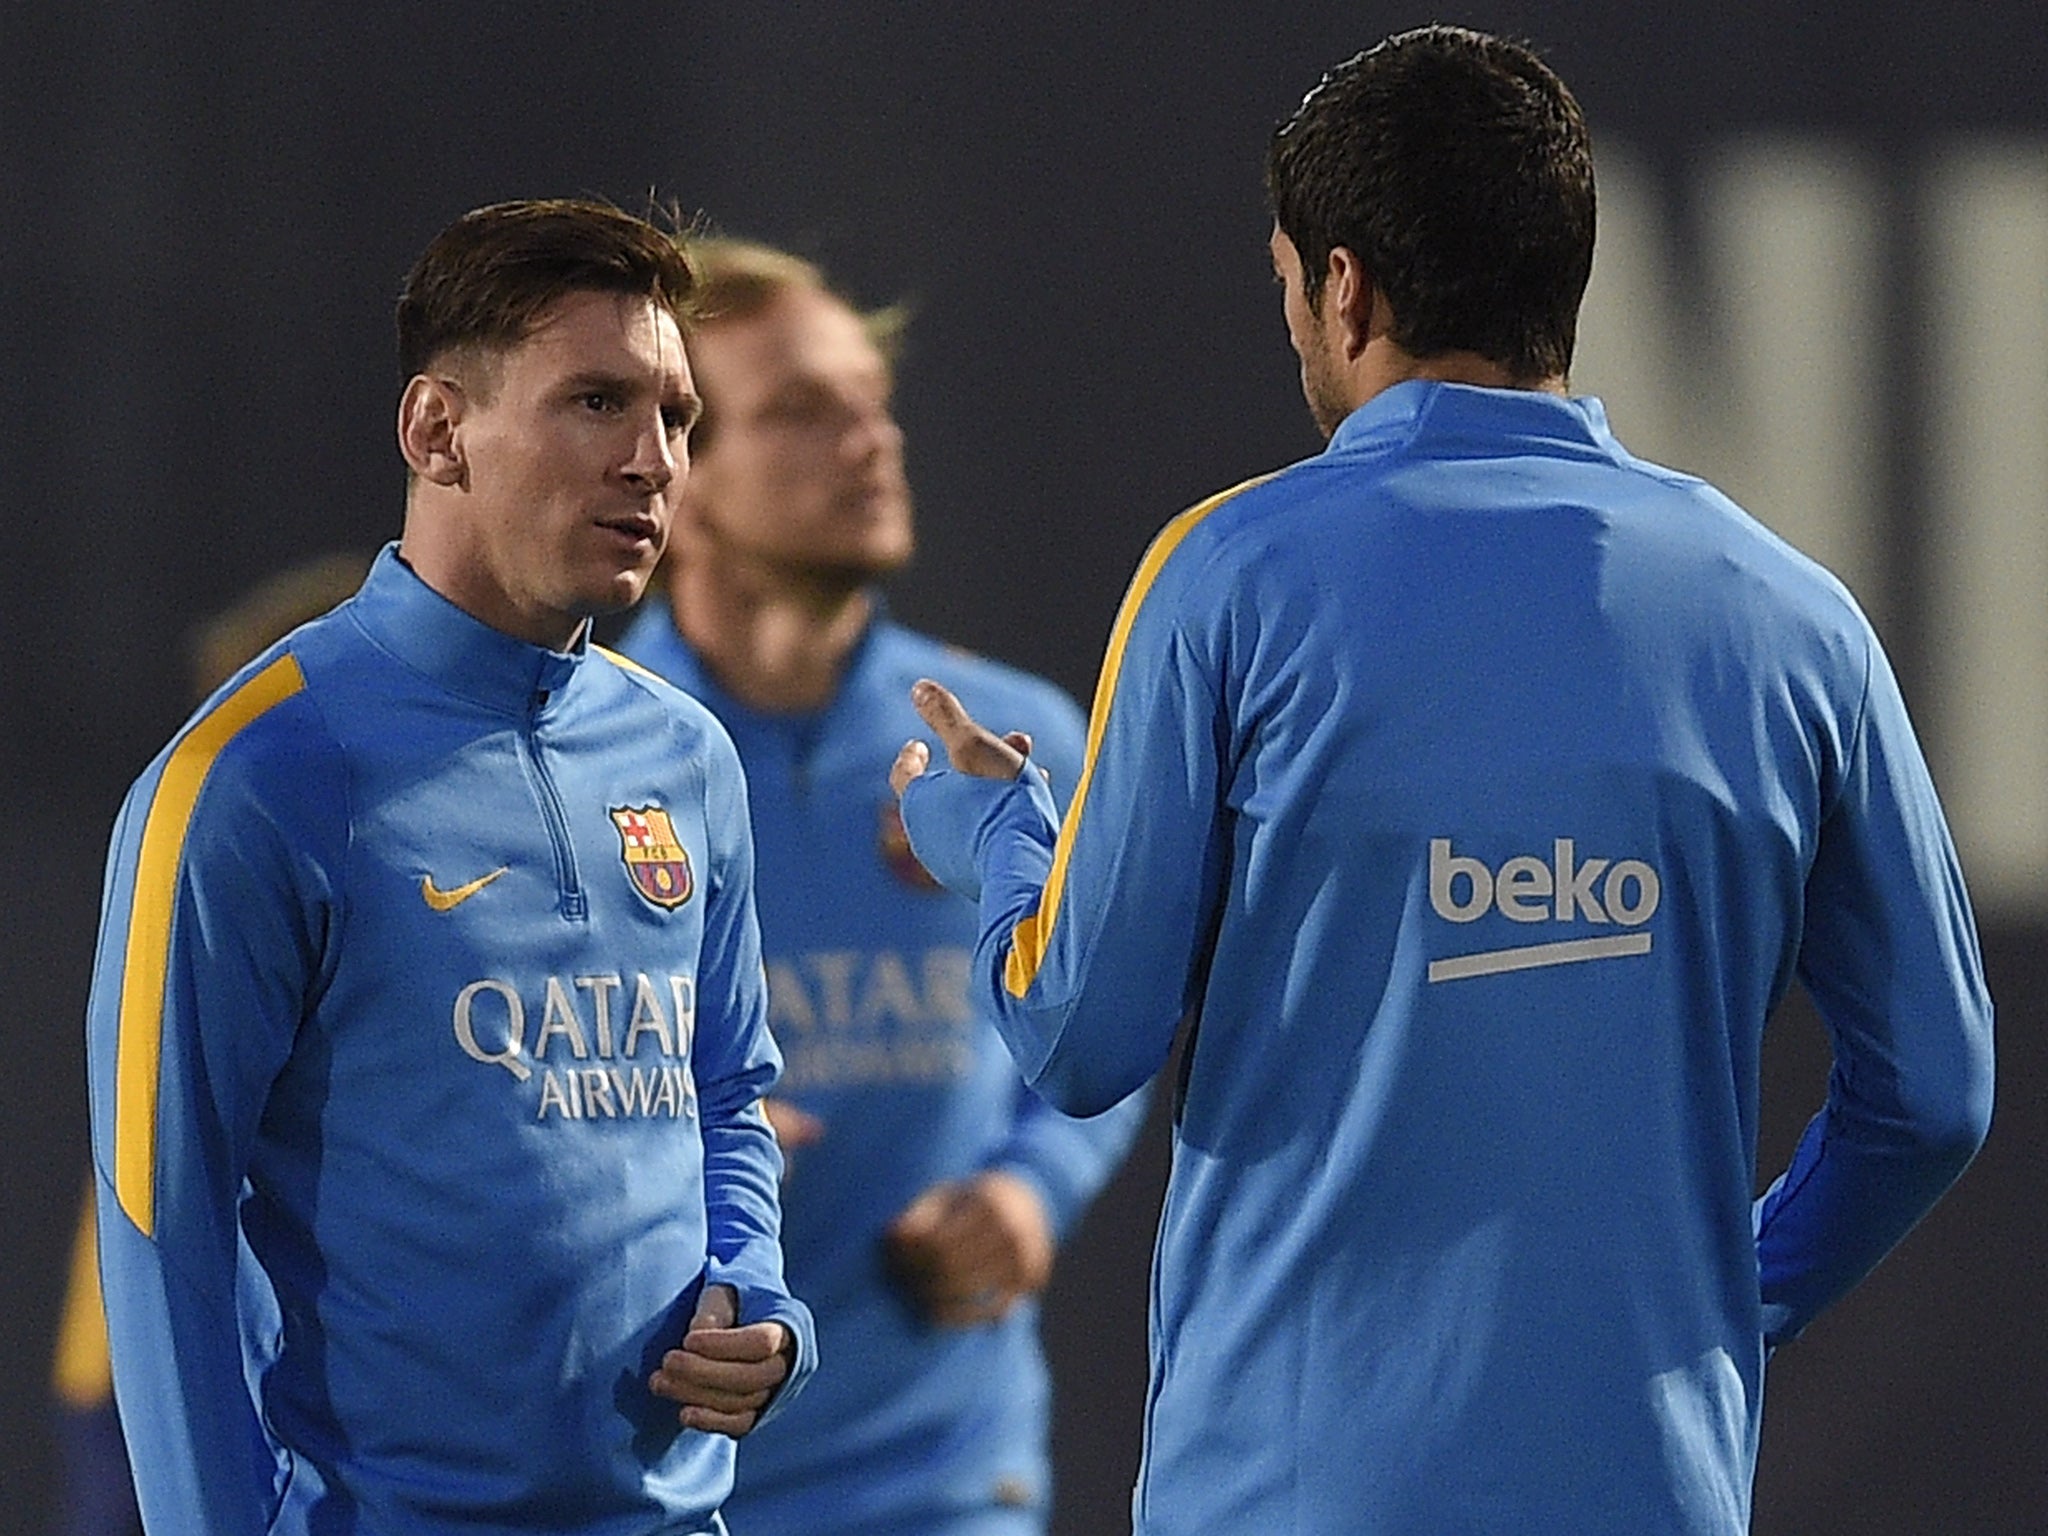 Barcelona forwards Lionel Messi and Luis Suarez